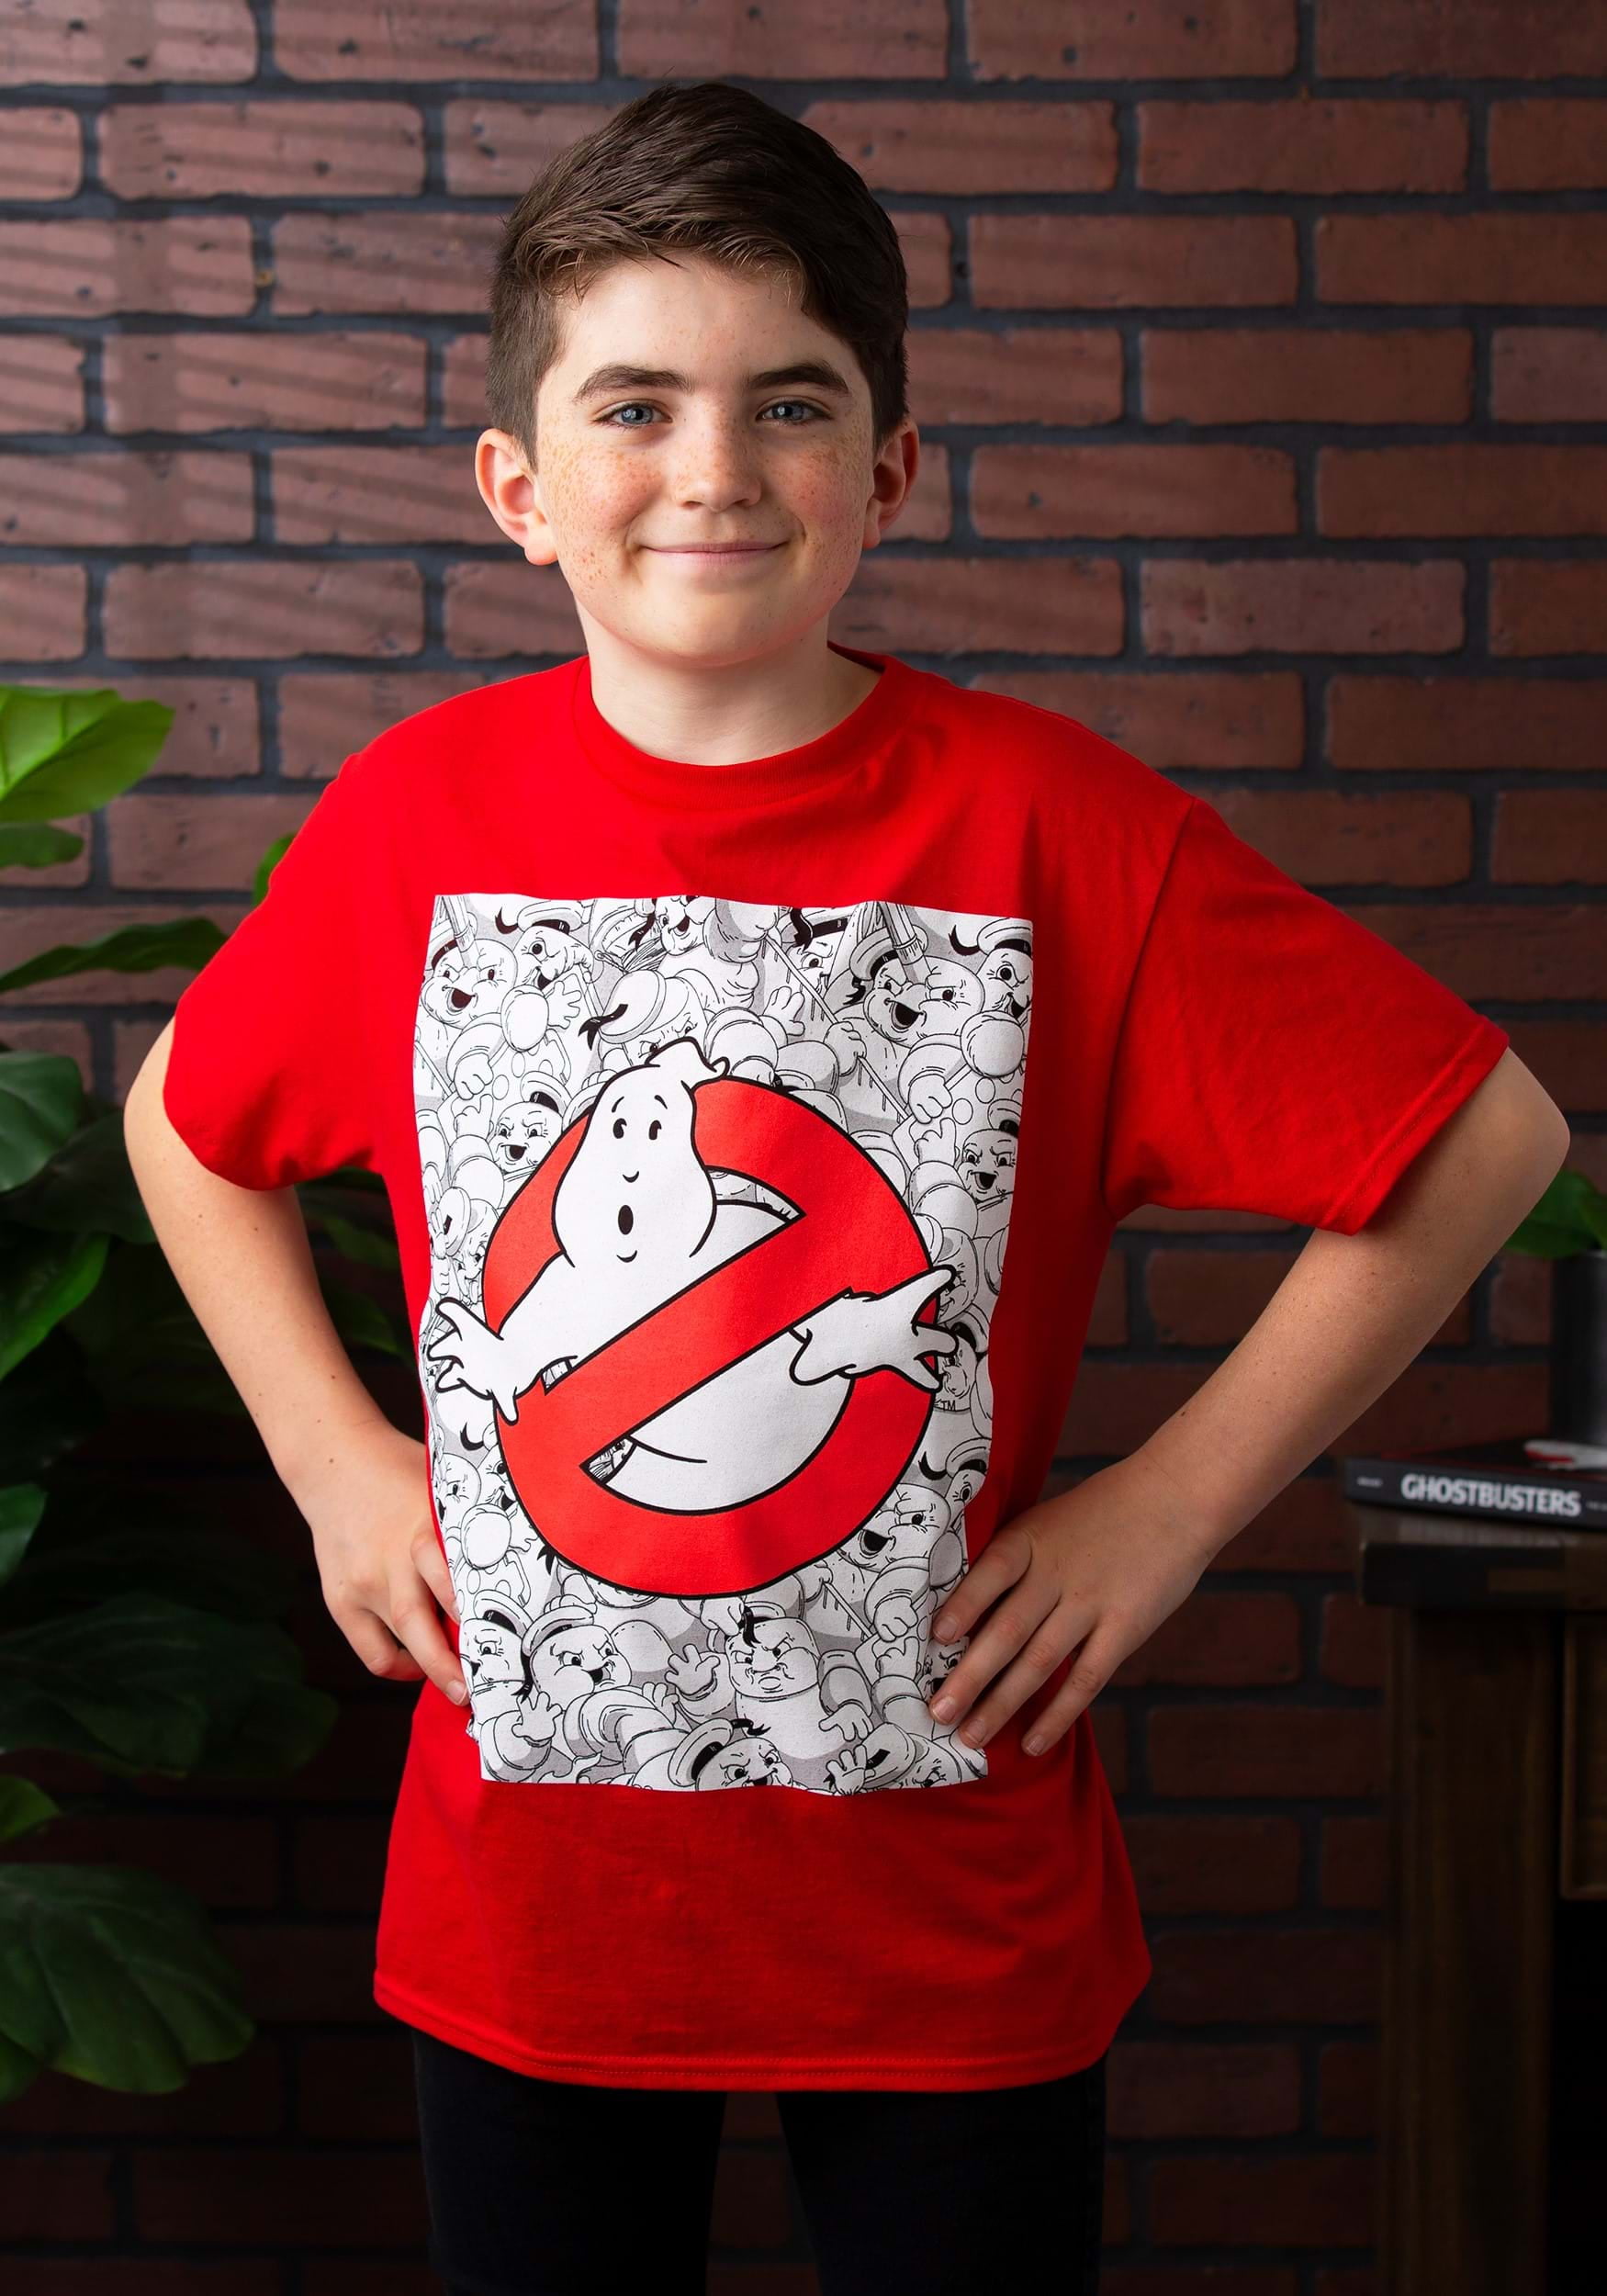 Ghostbusters Kid's T-Shirt Children Boys Girls Unisex Top 